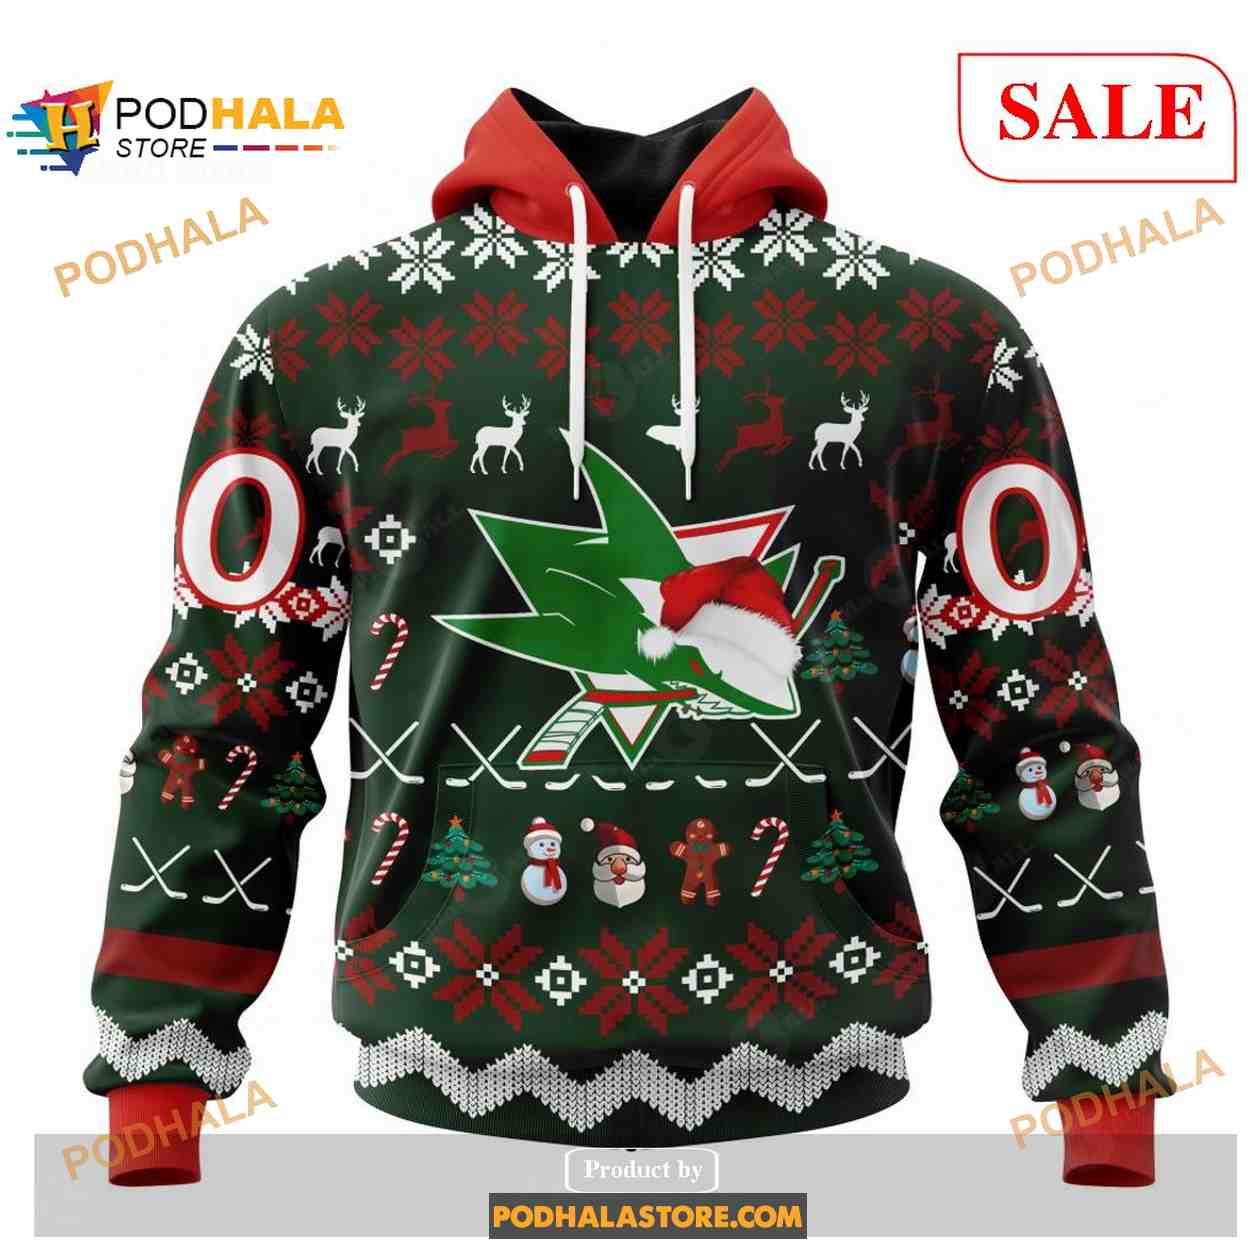 celtics christmas sweater